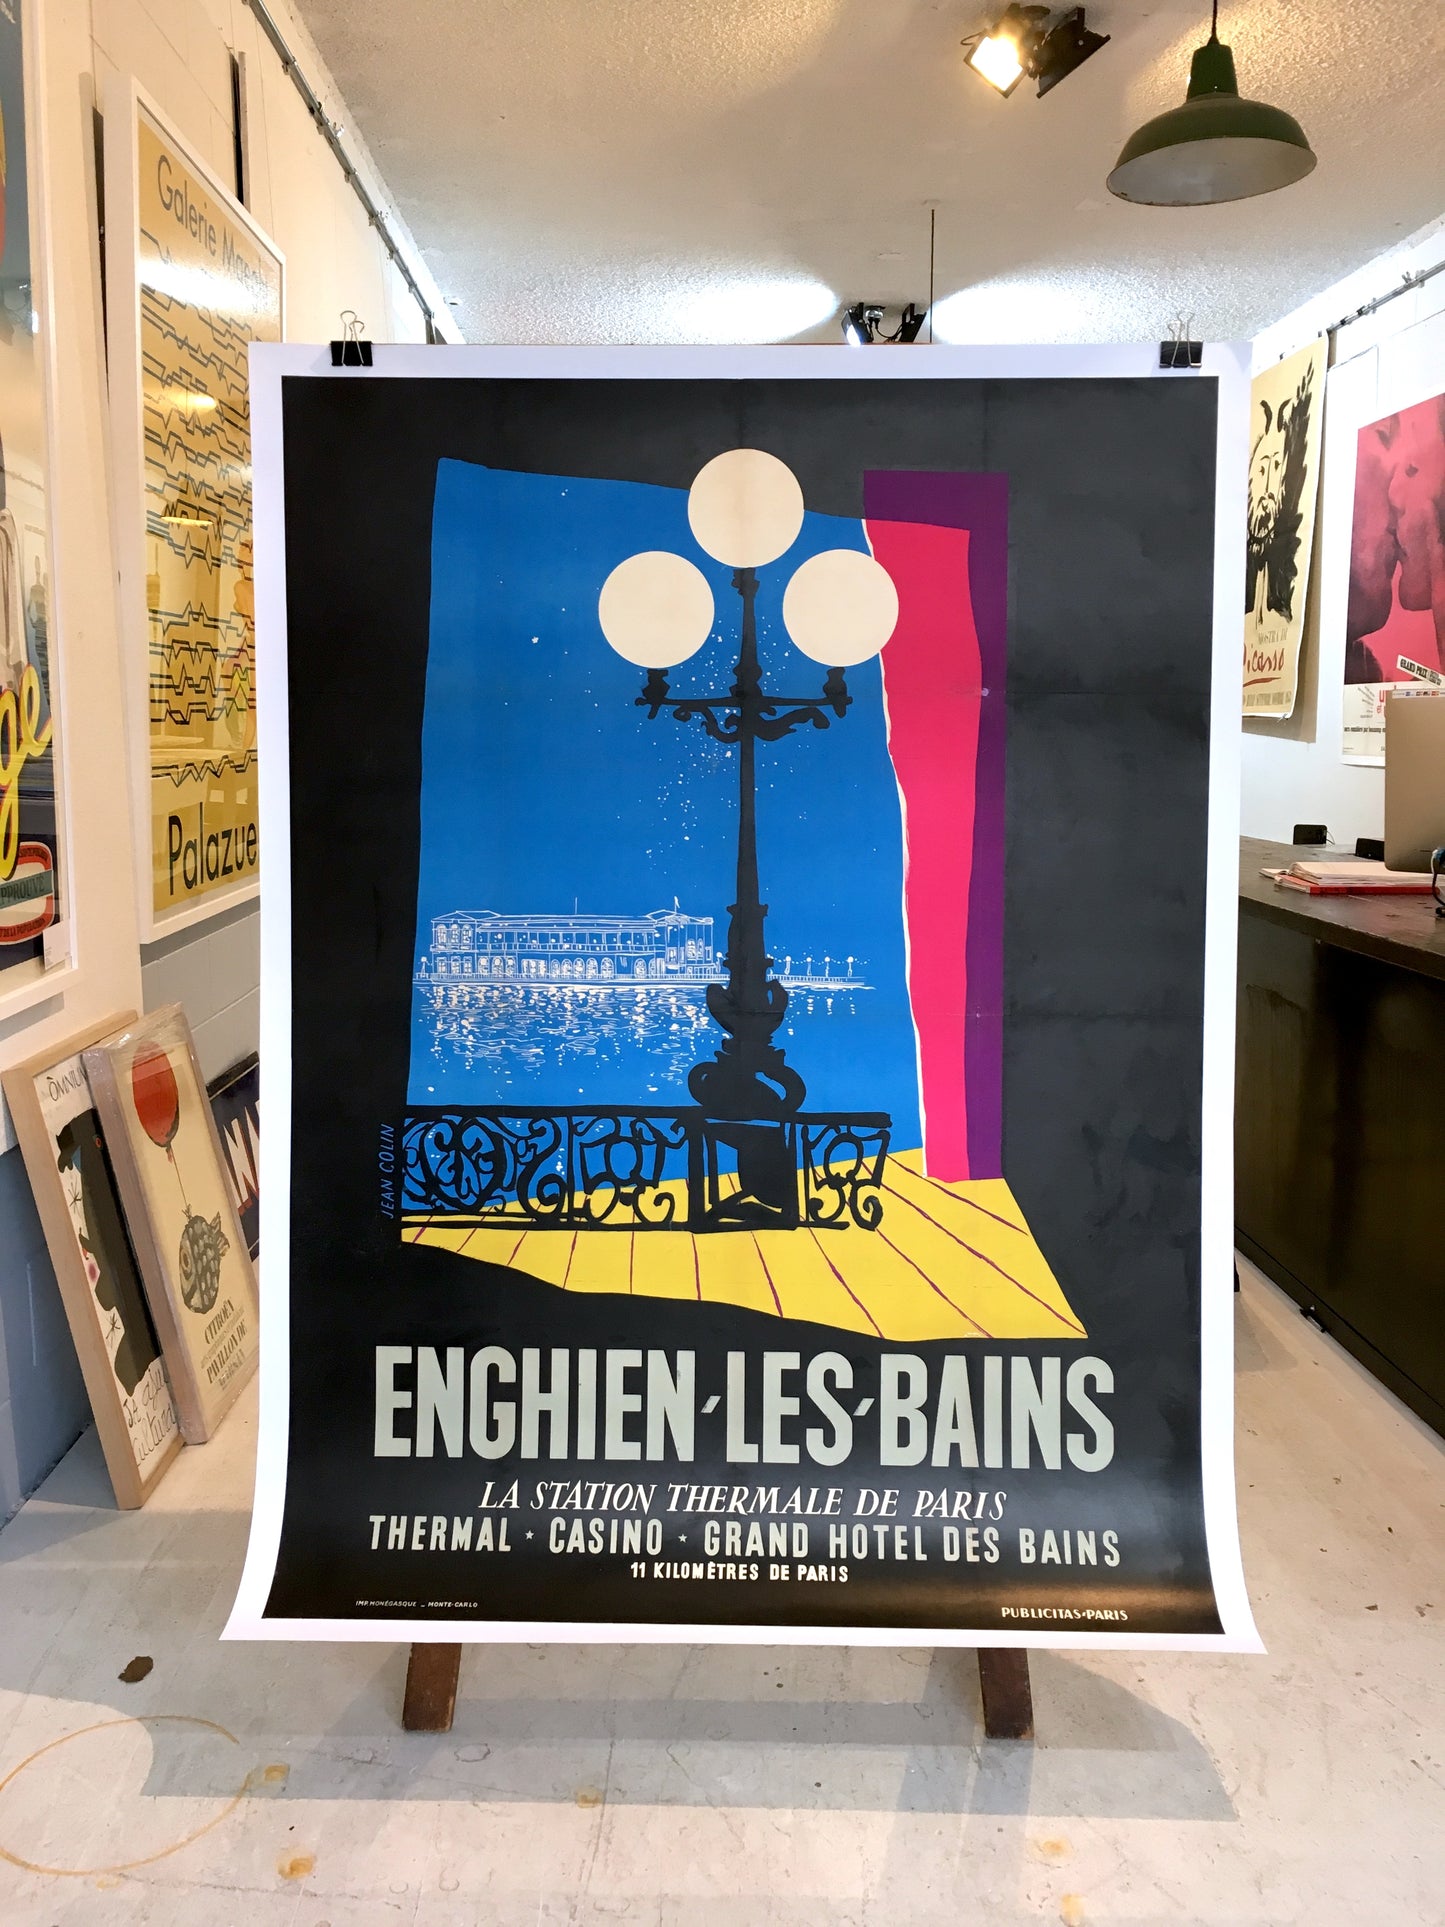 Enghien Les Bains by Jean Colin